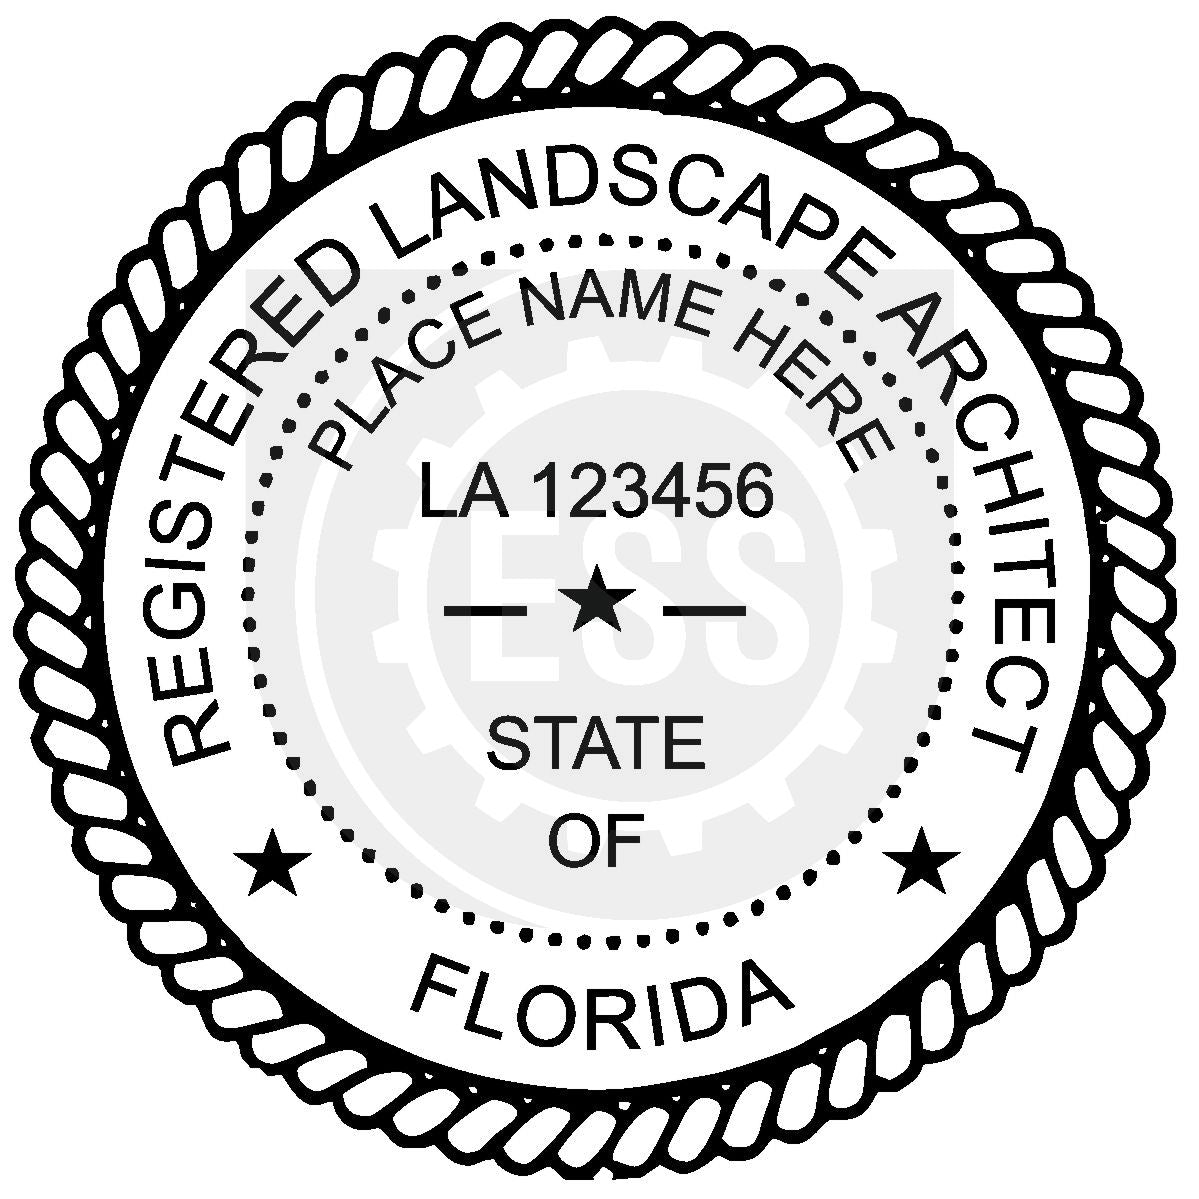 Florida Landscape Architect Seal Setup